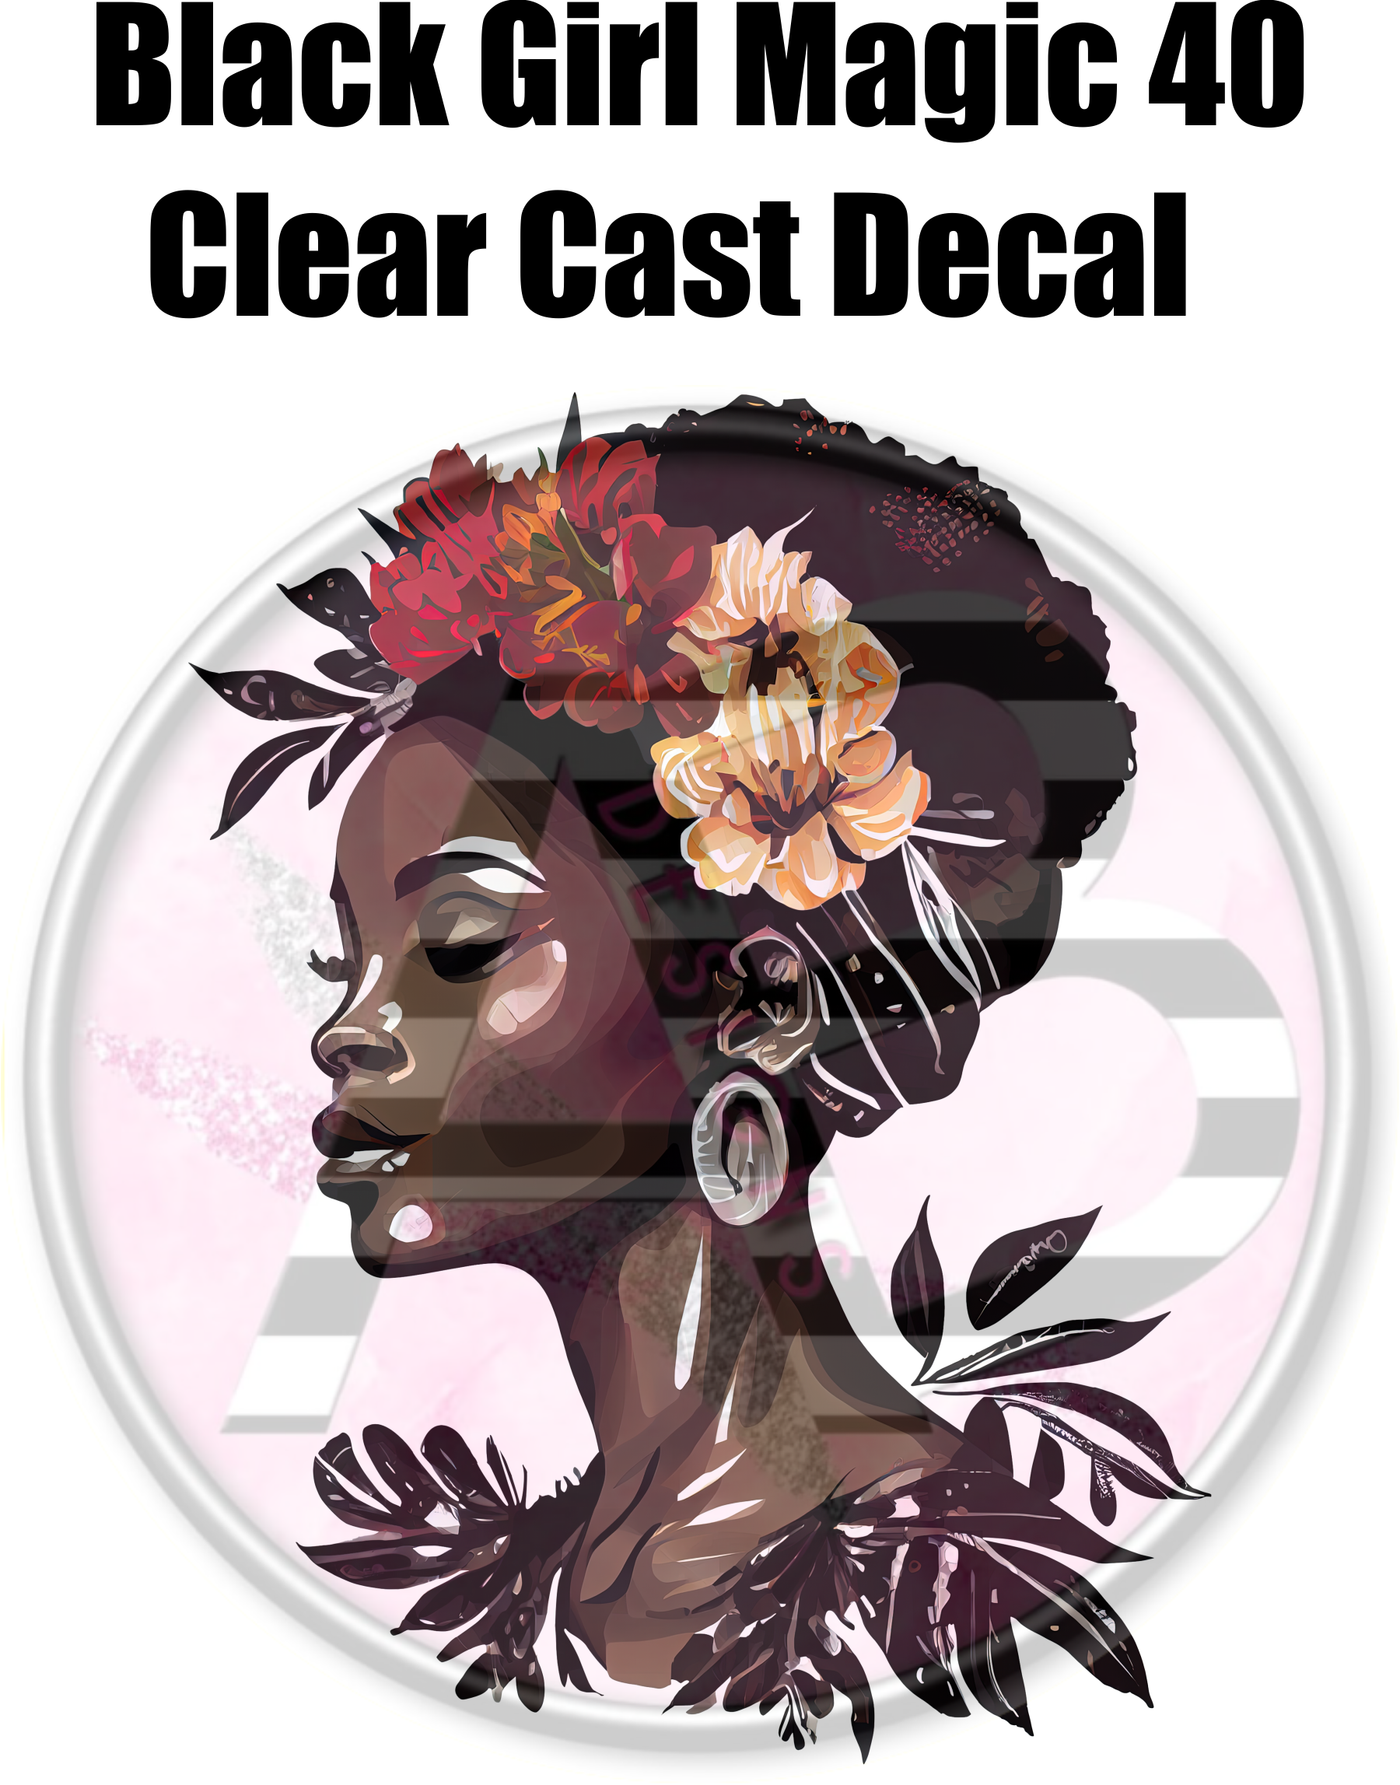 Black Girl Magic 40 - Clear Cast Decal